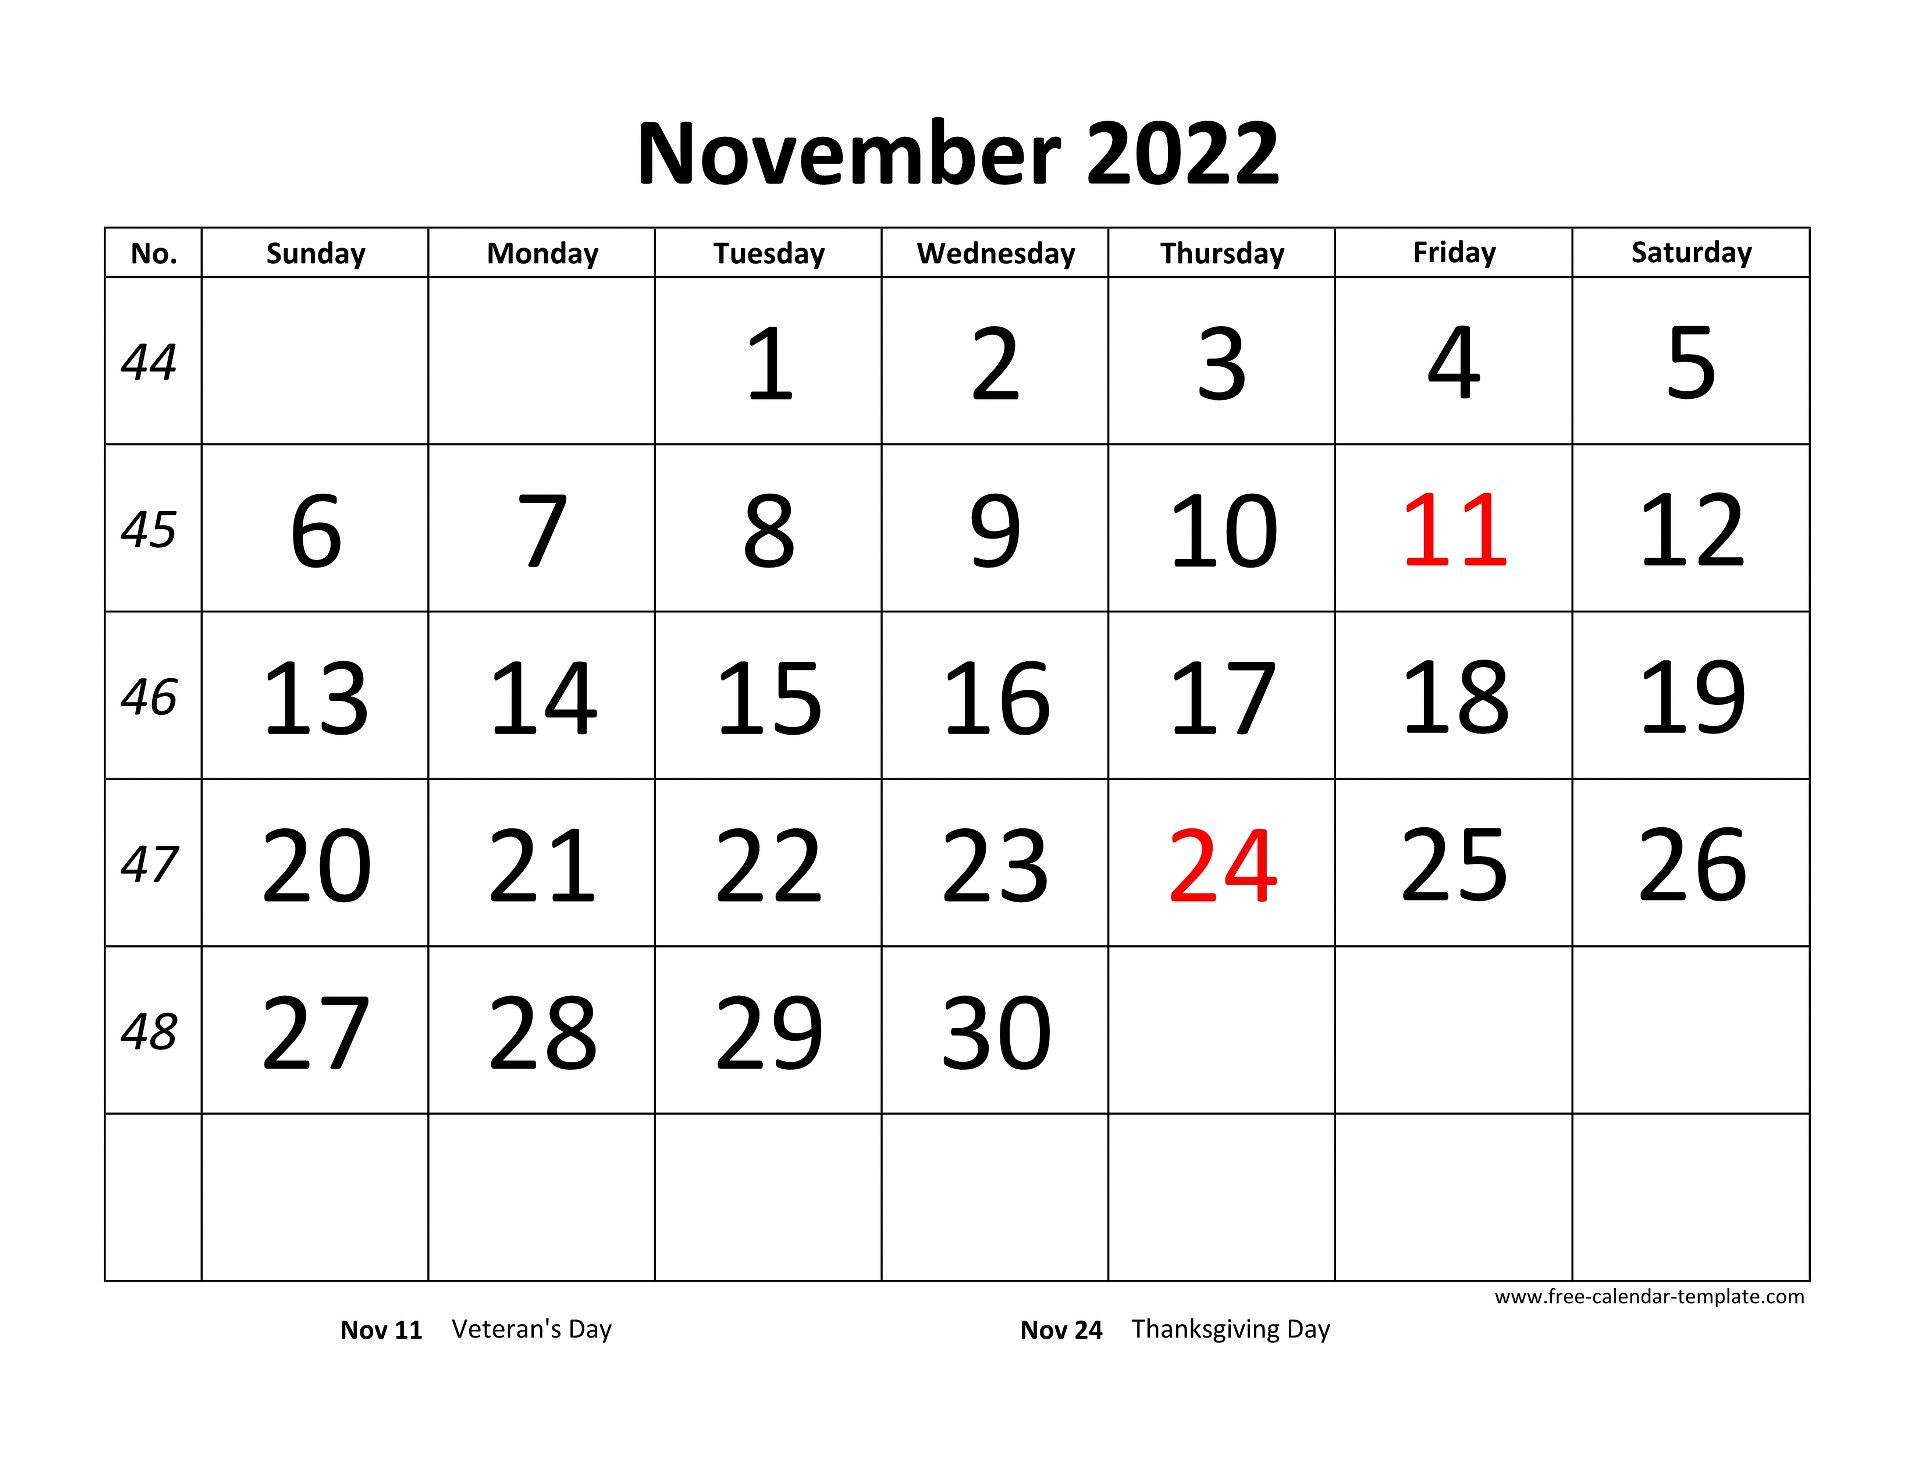 November 29 2022 Calendar | December 2022 Calendar-School Calendar 2022 In Kenya